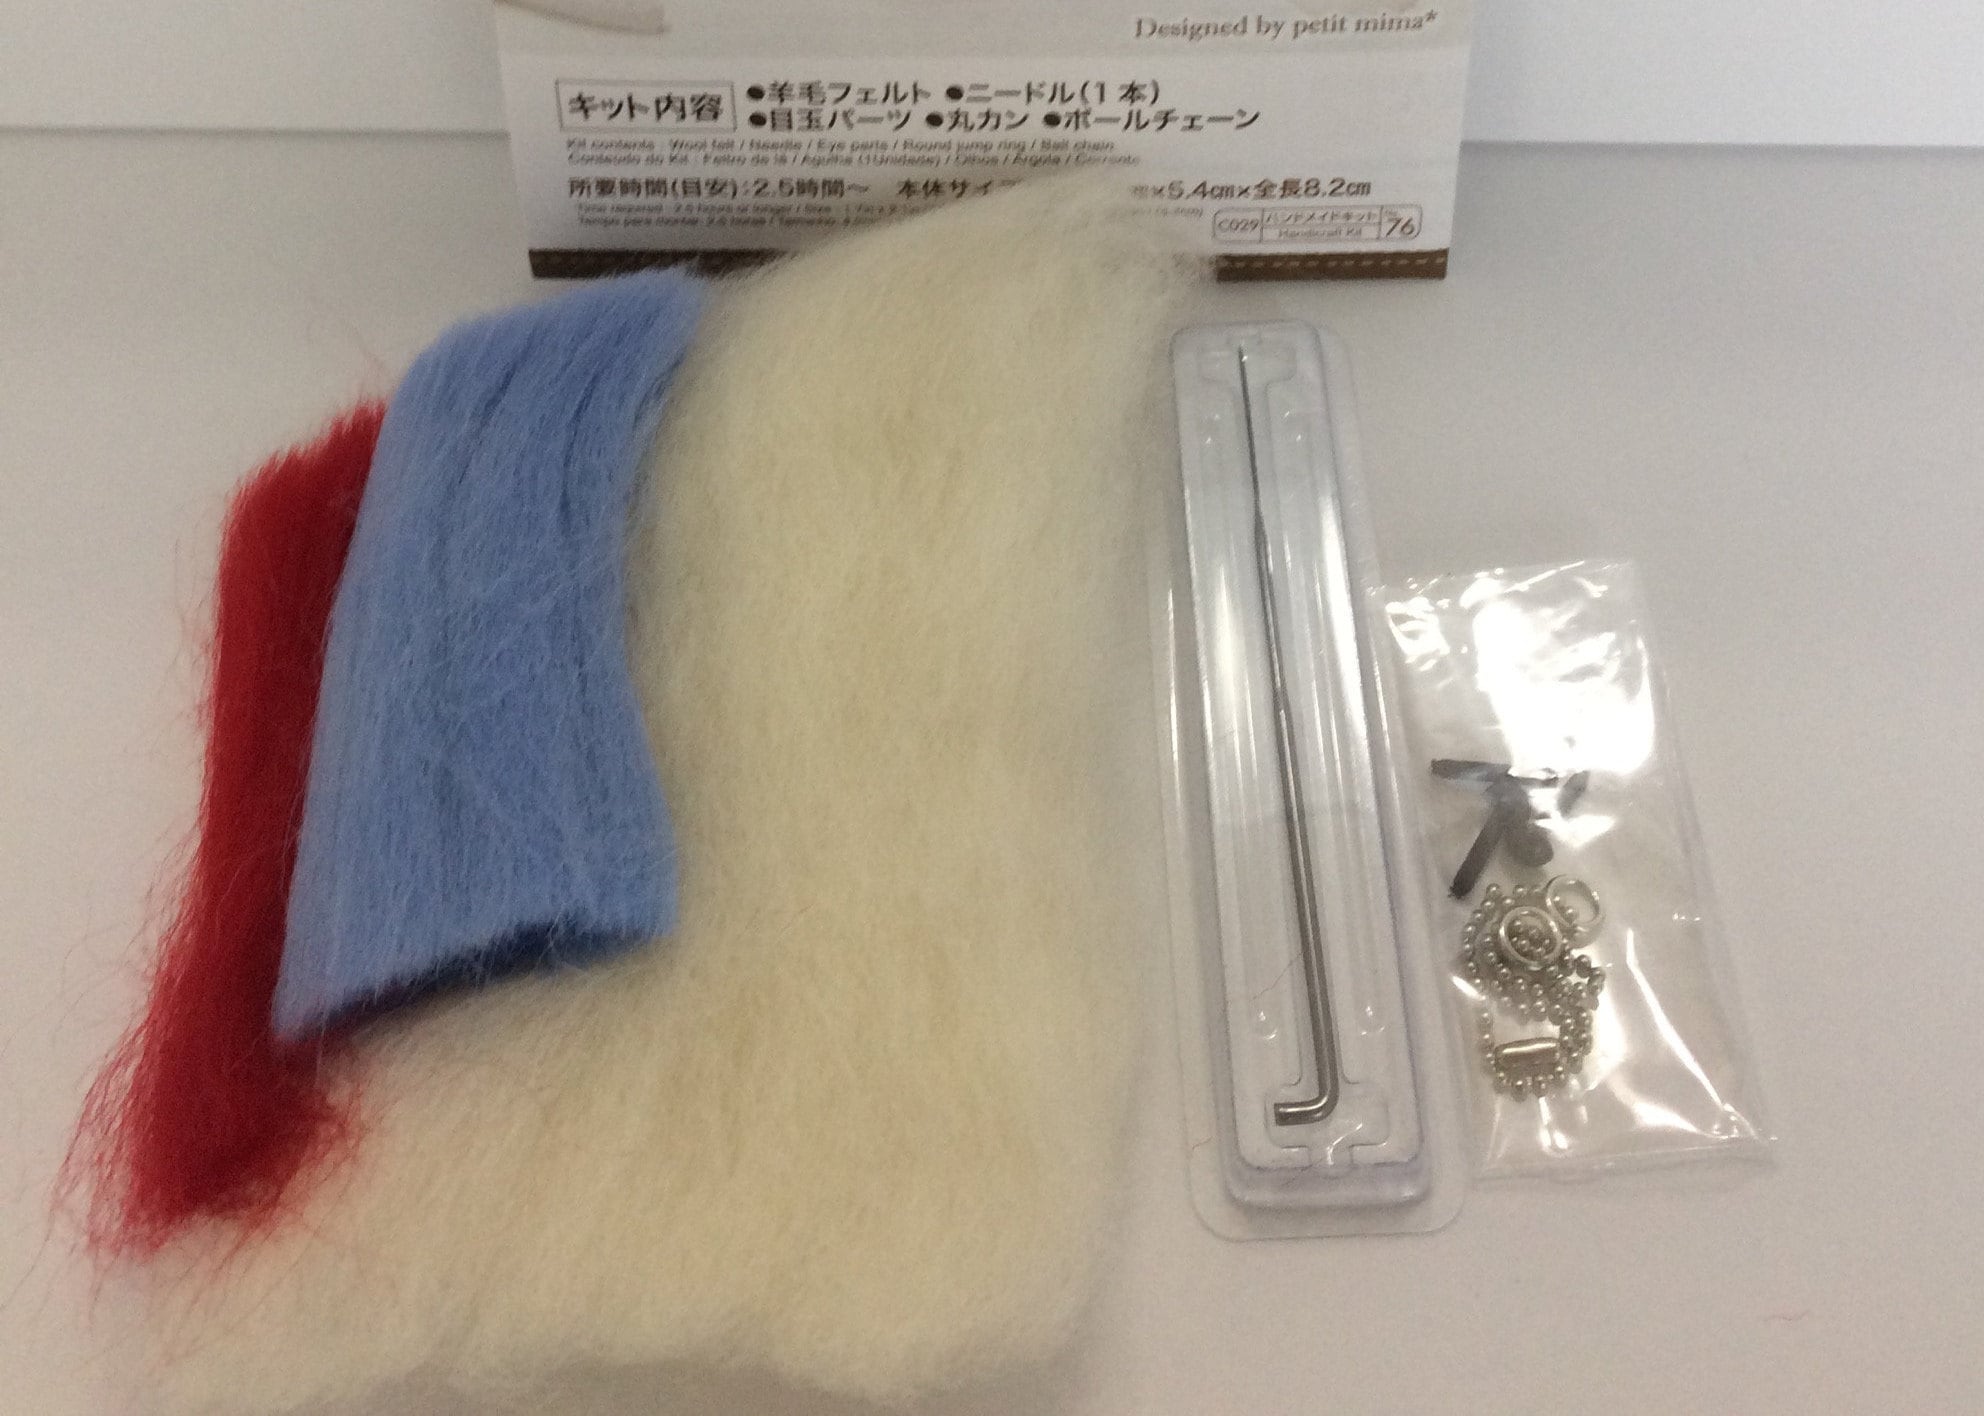 Daiso Japan Wool Felt Petit Animal Handmade DIY Kit [Chef Bear]